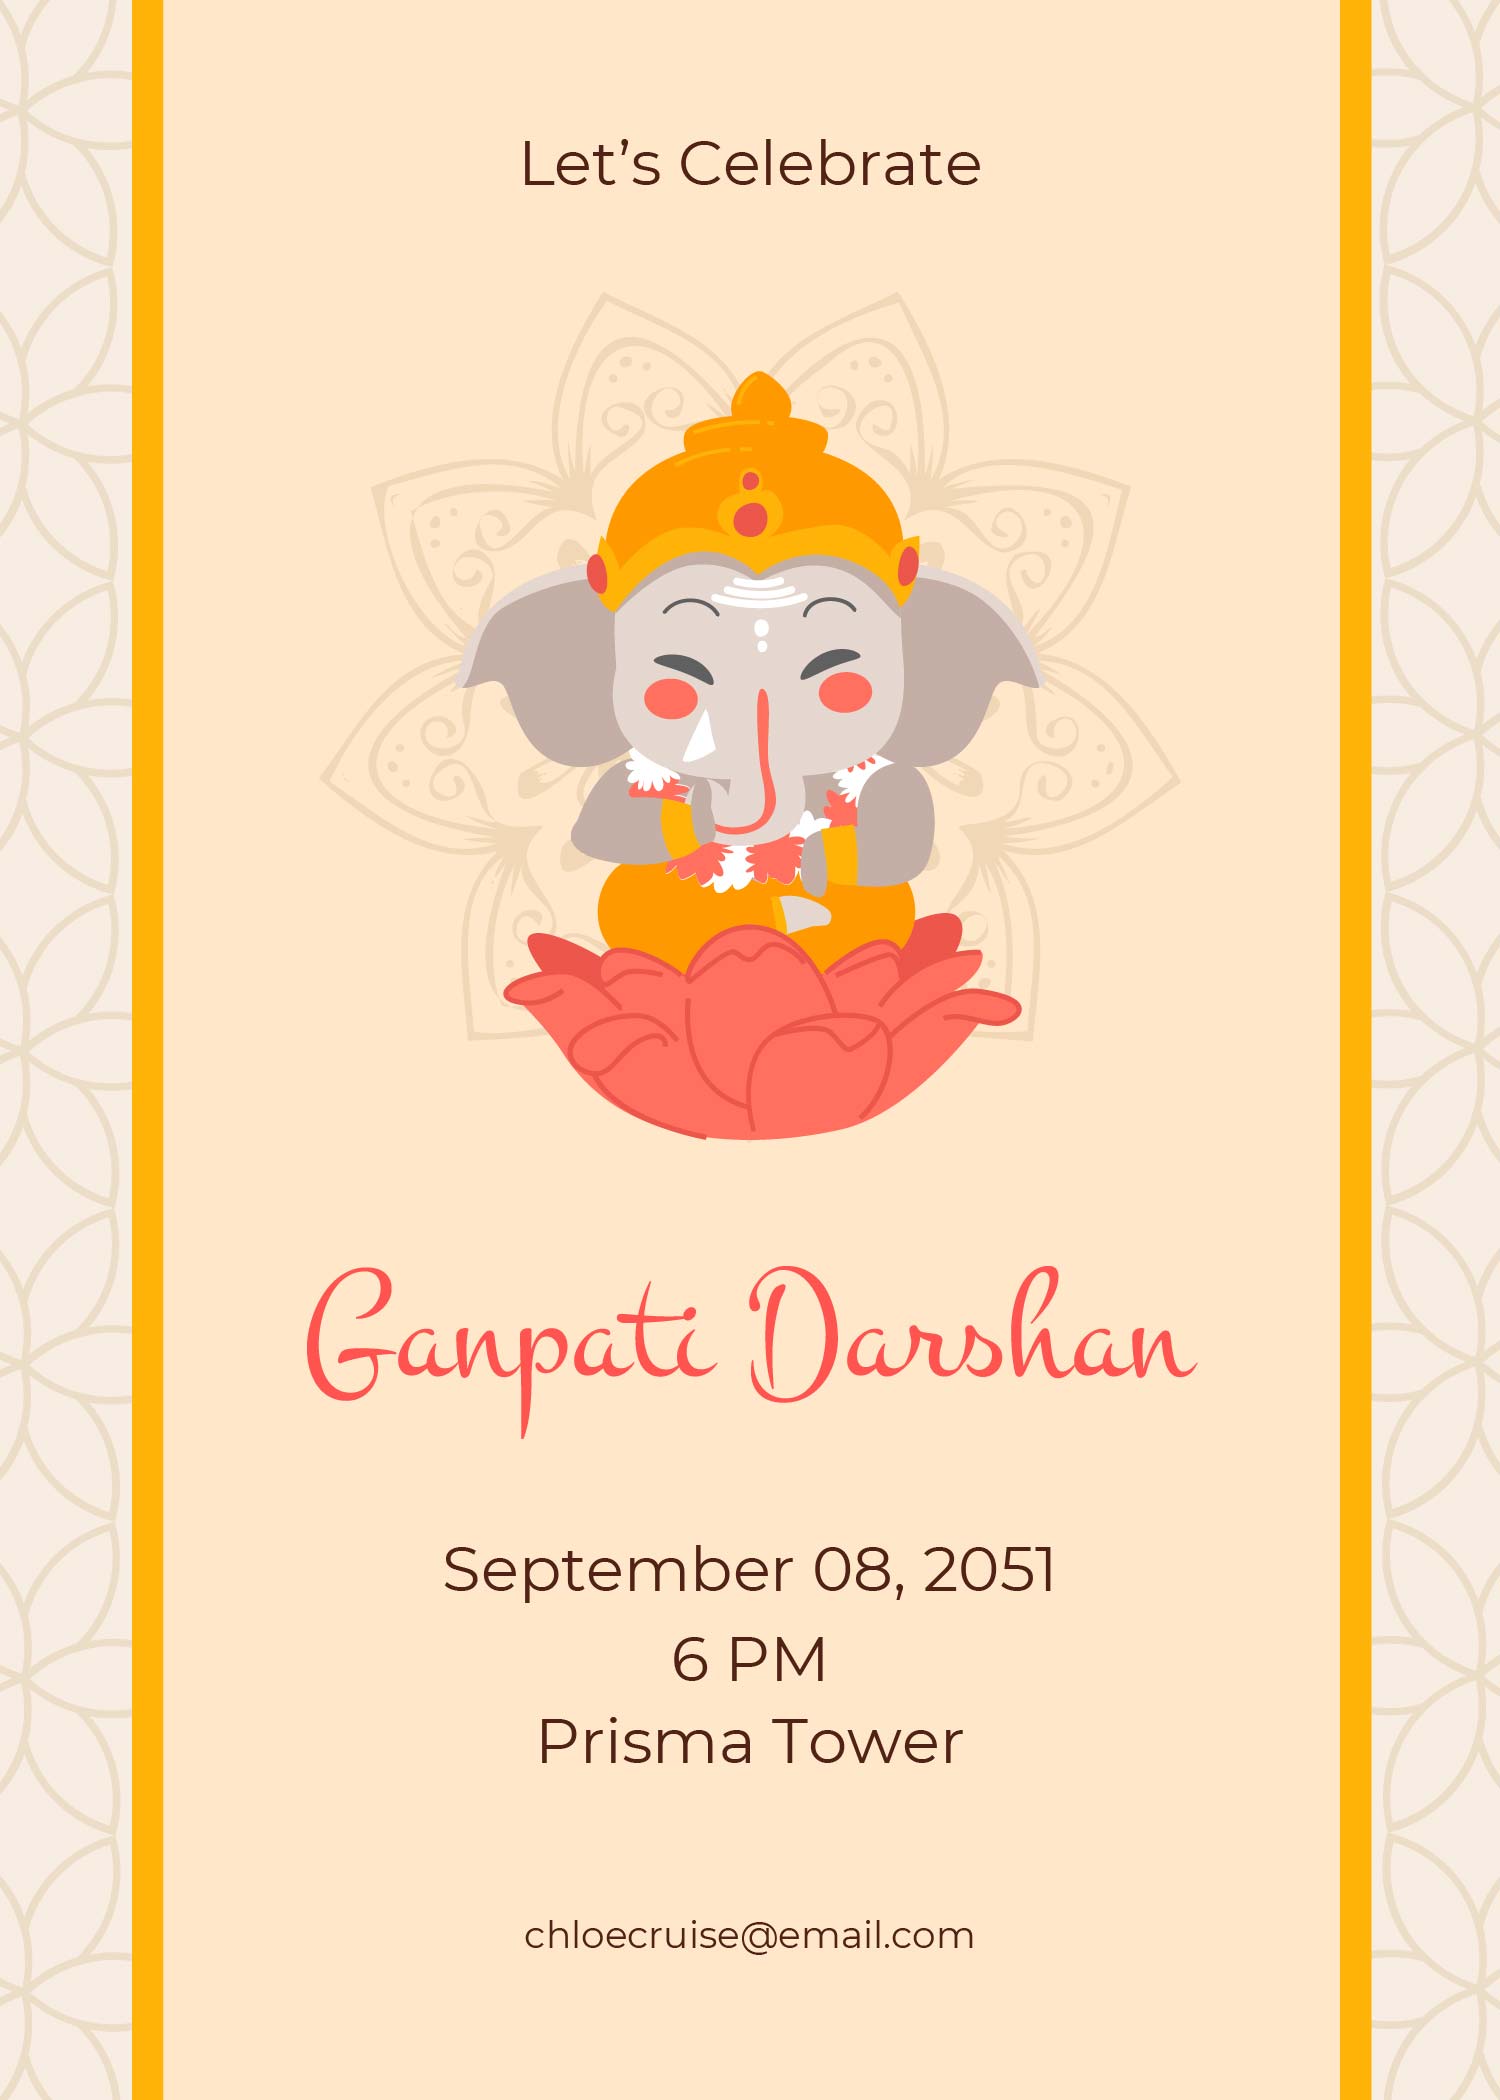 Ganpati Darshan Invitation Template